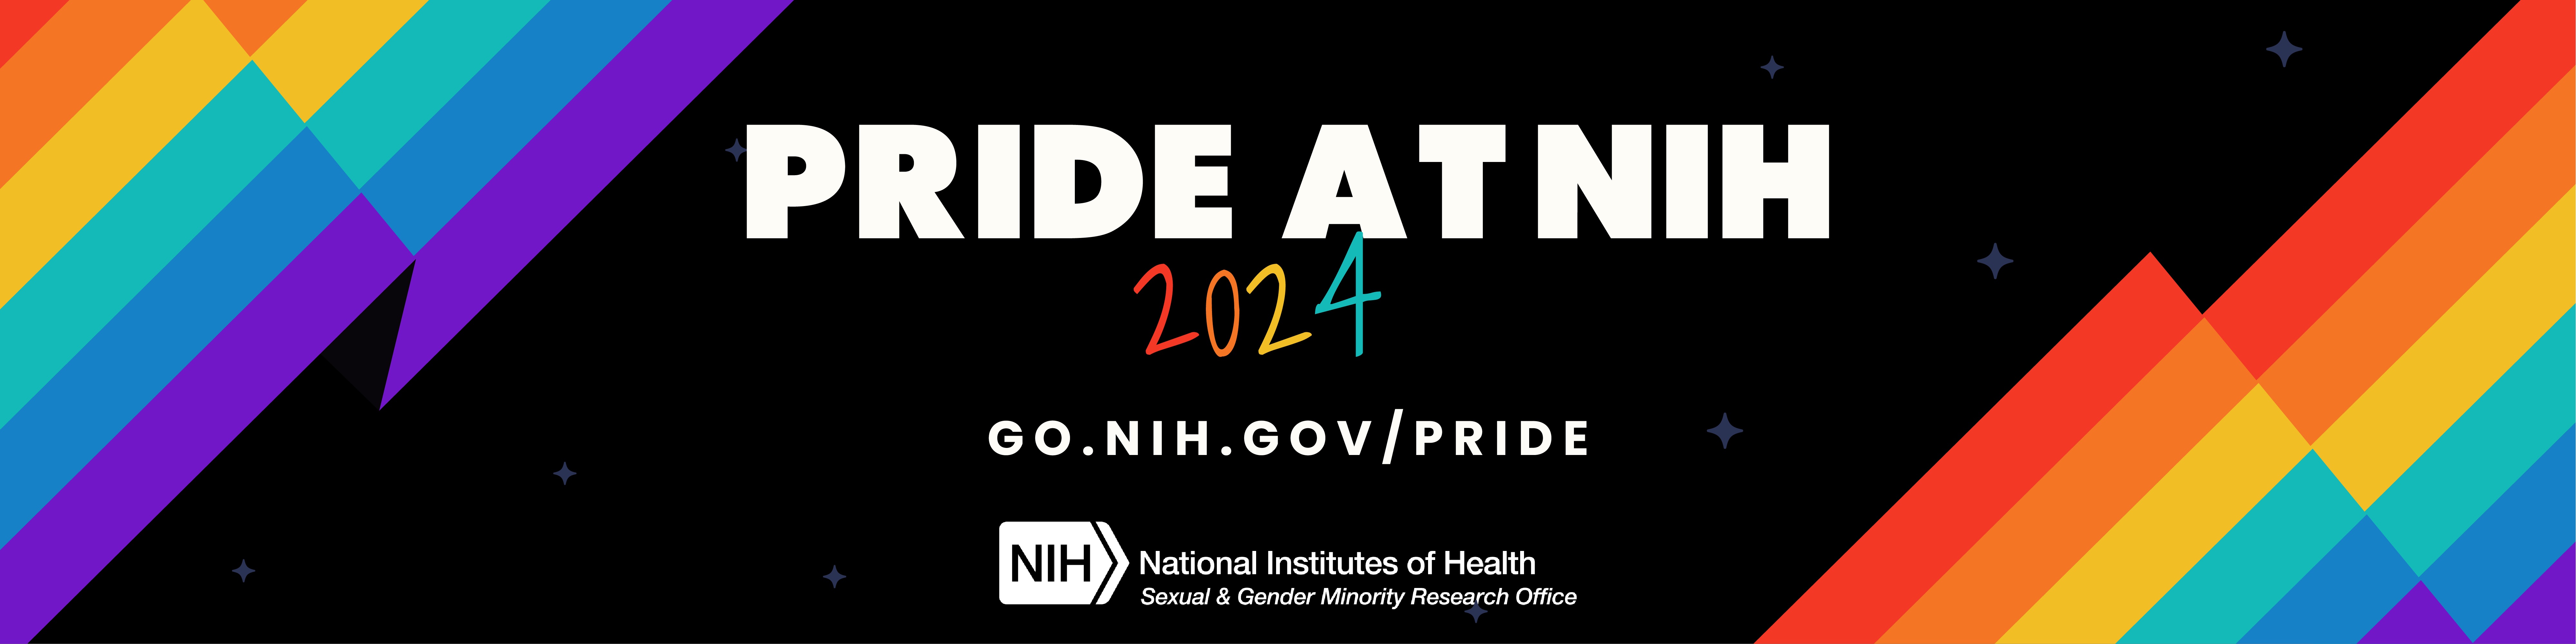 Pride at NIH